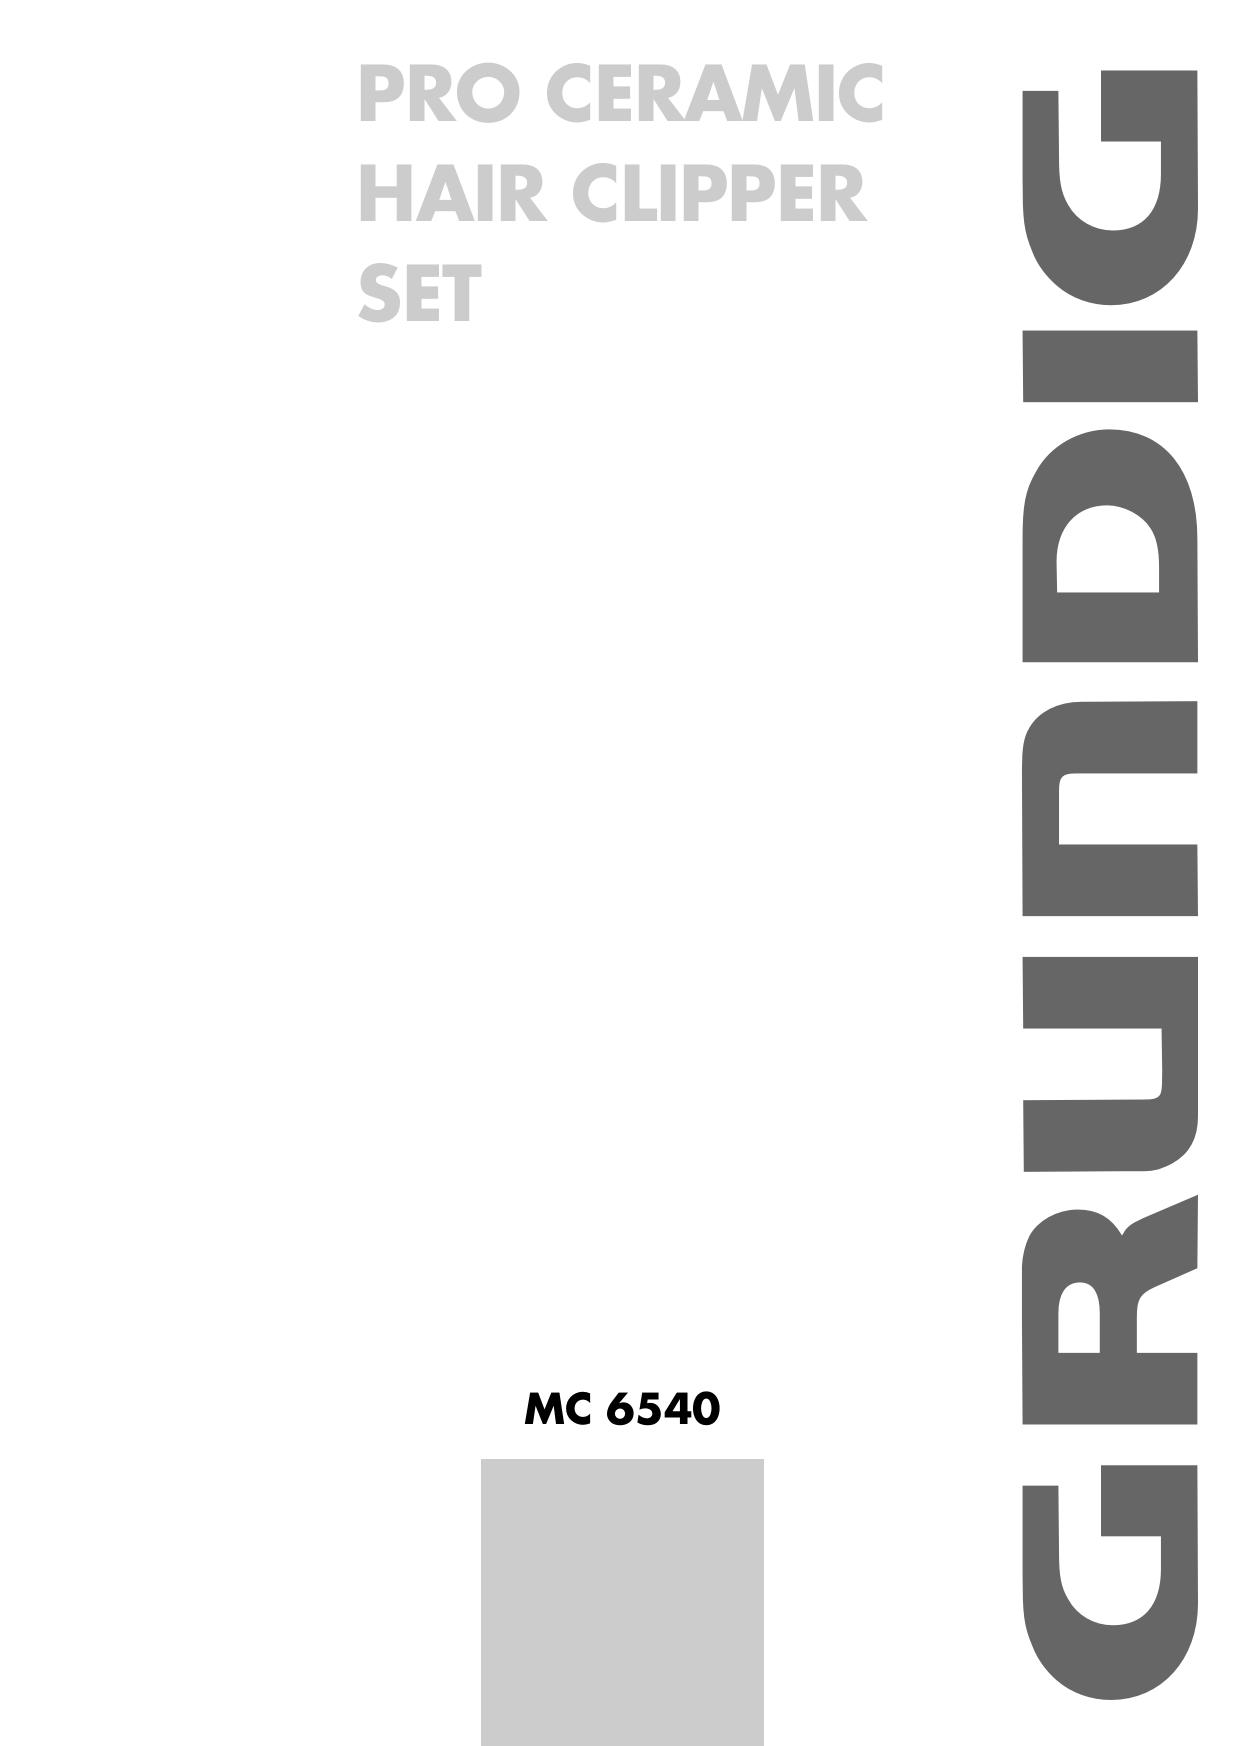 Grundig MC 6540 Hair Clippers User Manual